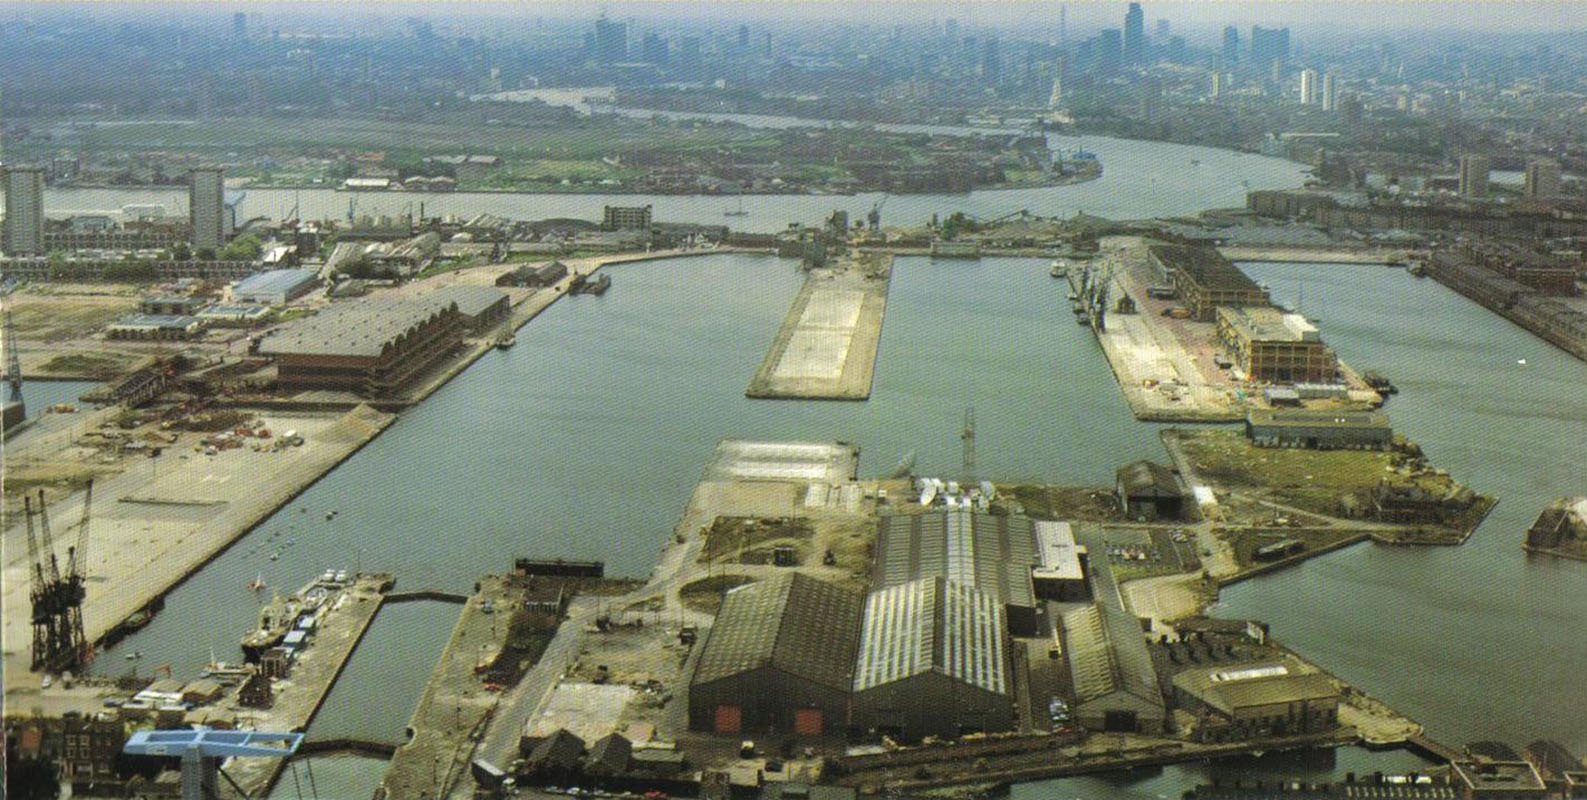 Canary Wharf, West India Docks 1992-1993